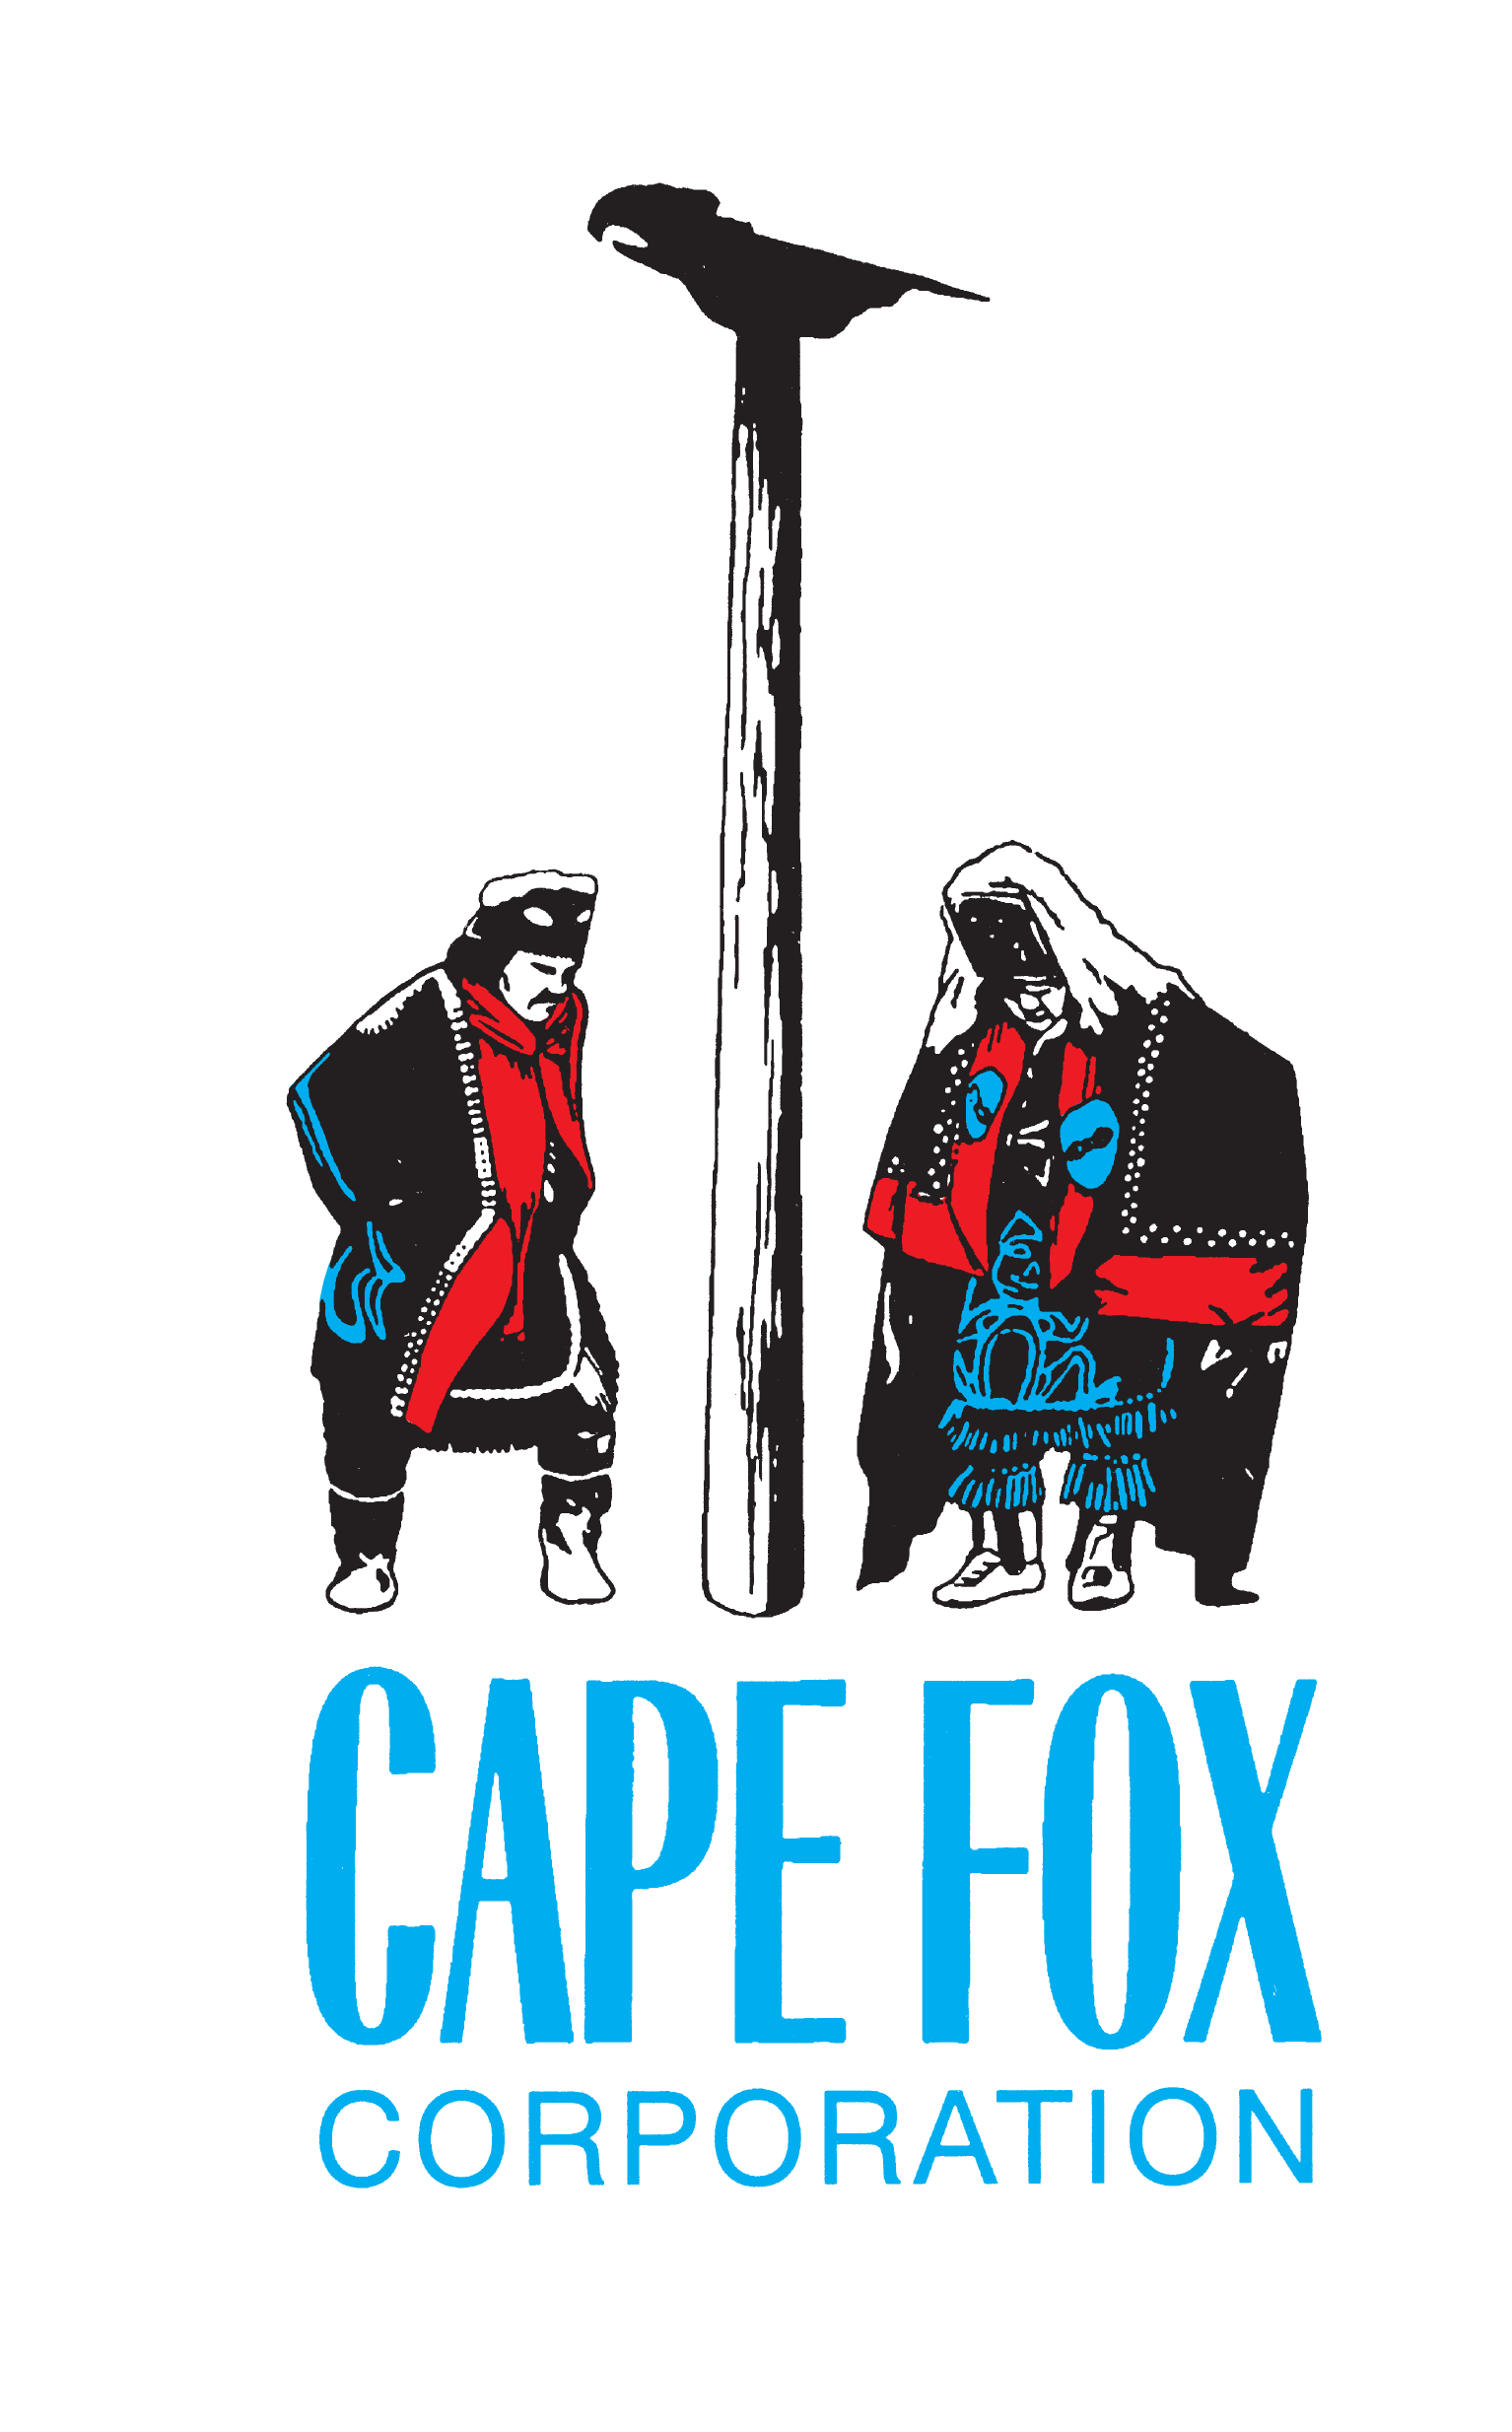 Cape Fox Corporation